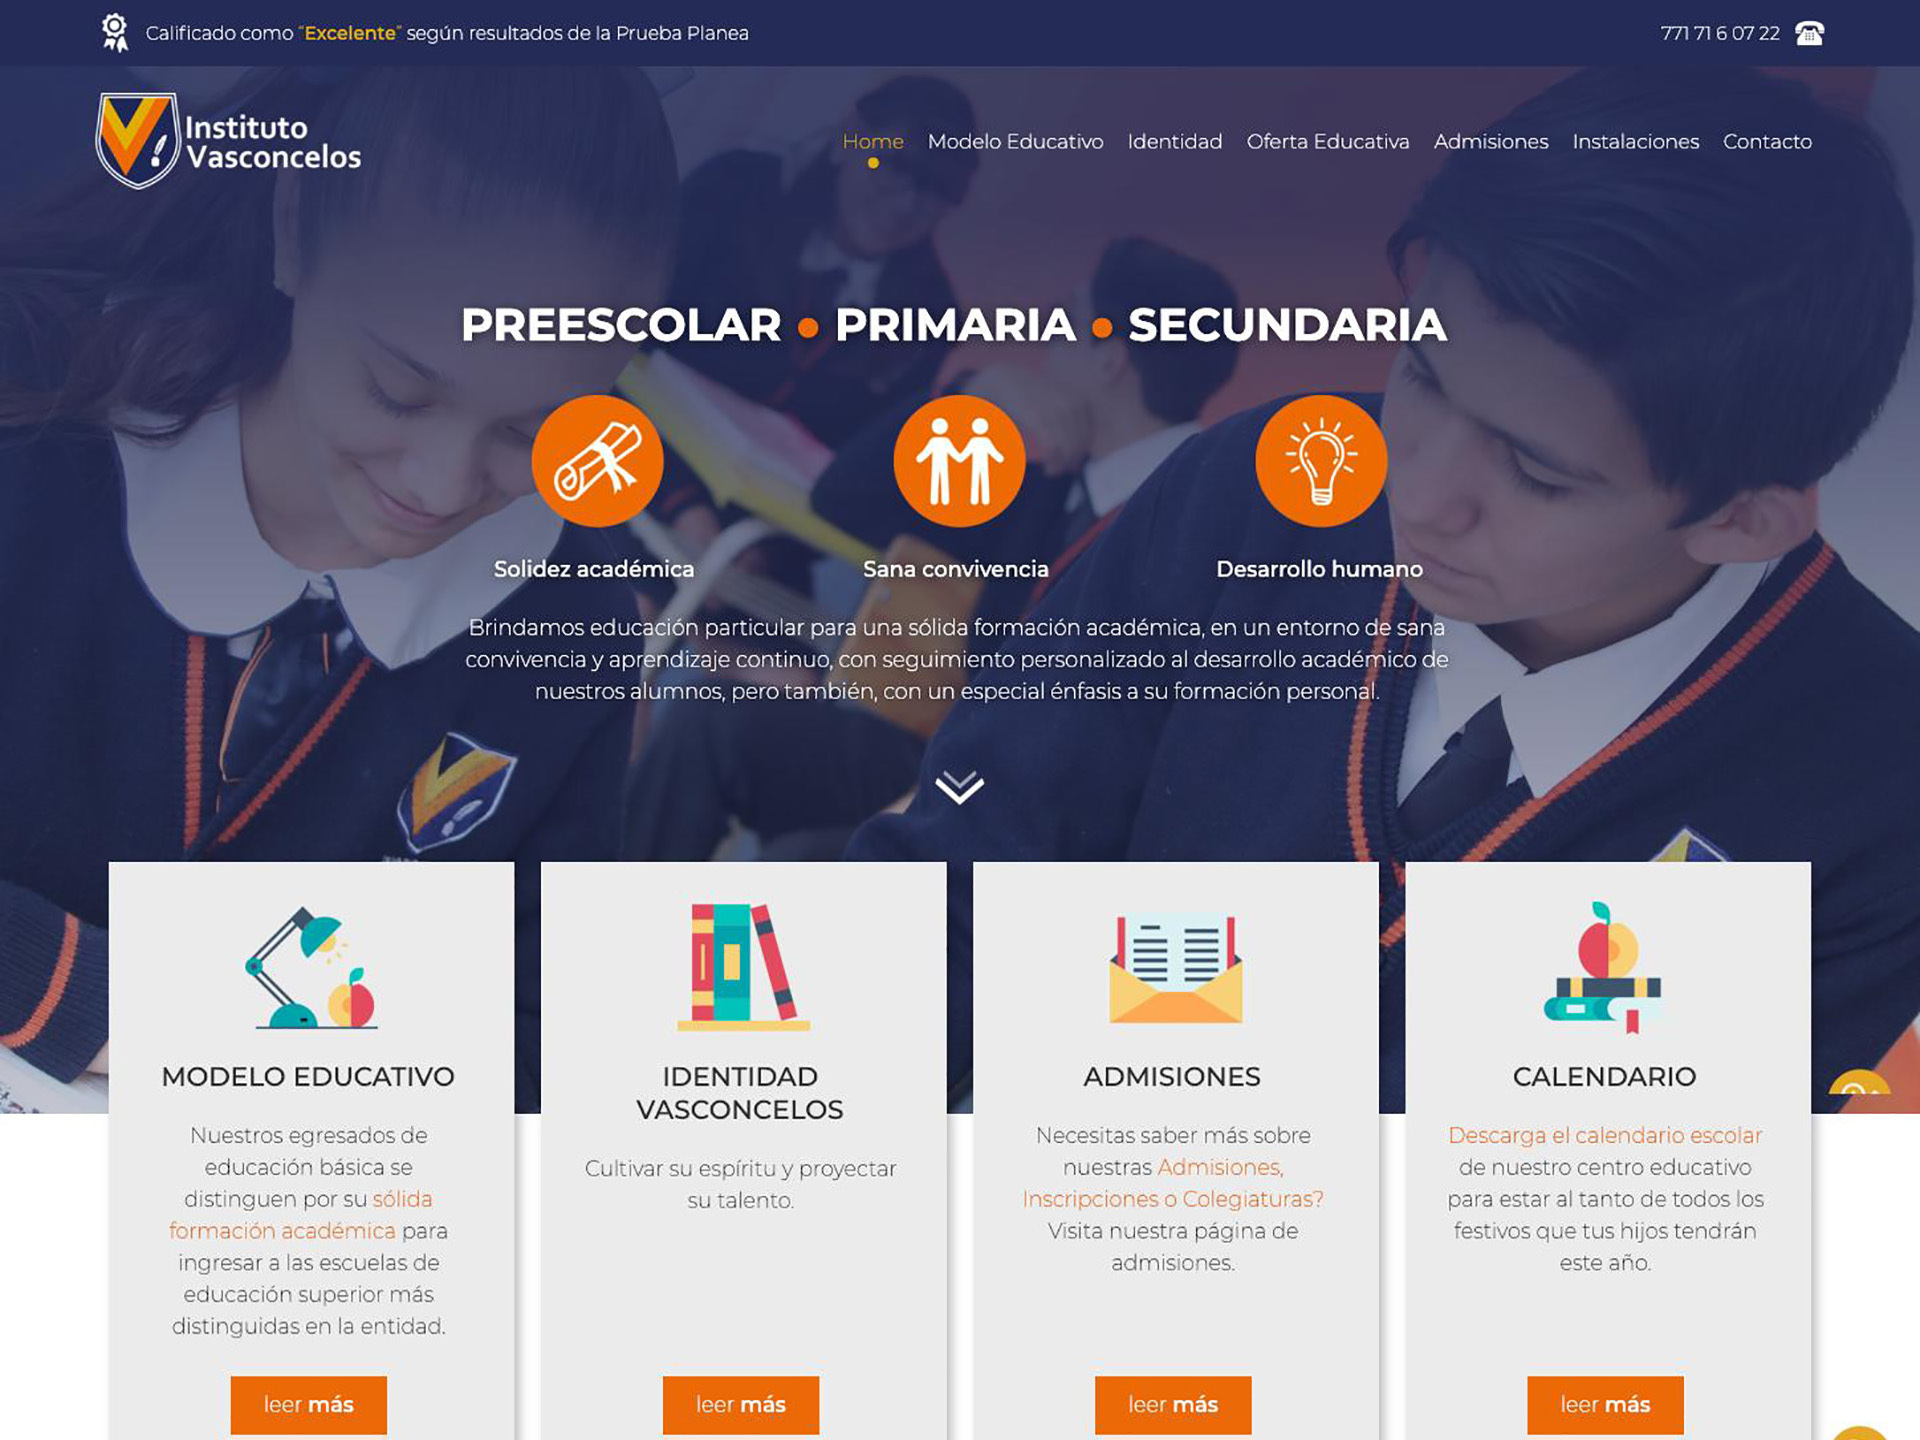 The Instituto Vasconcelos website created by it'seeze Birmingham